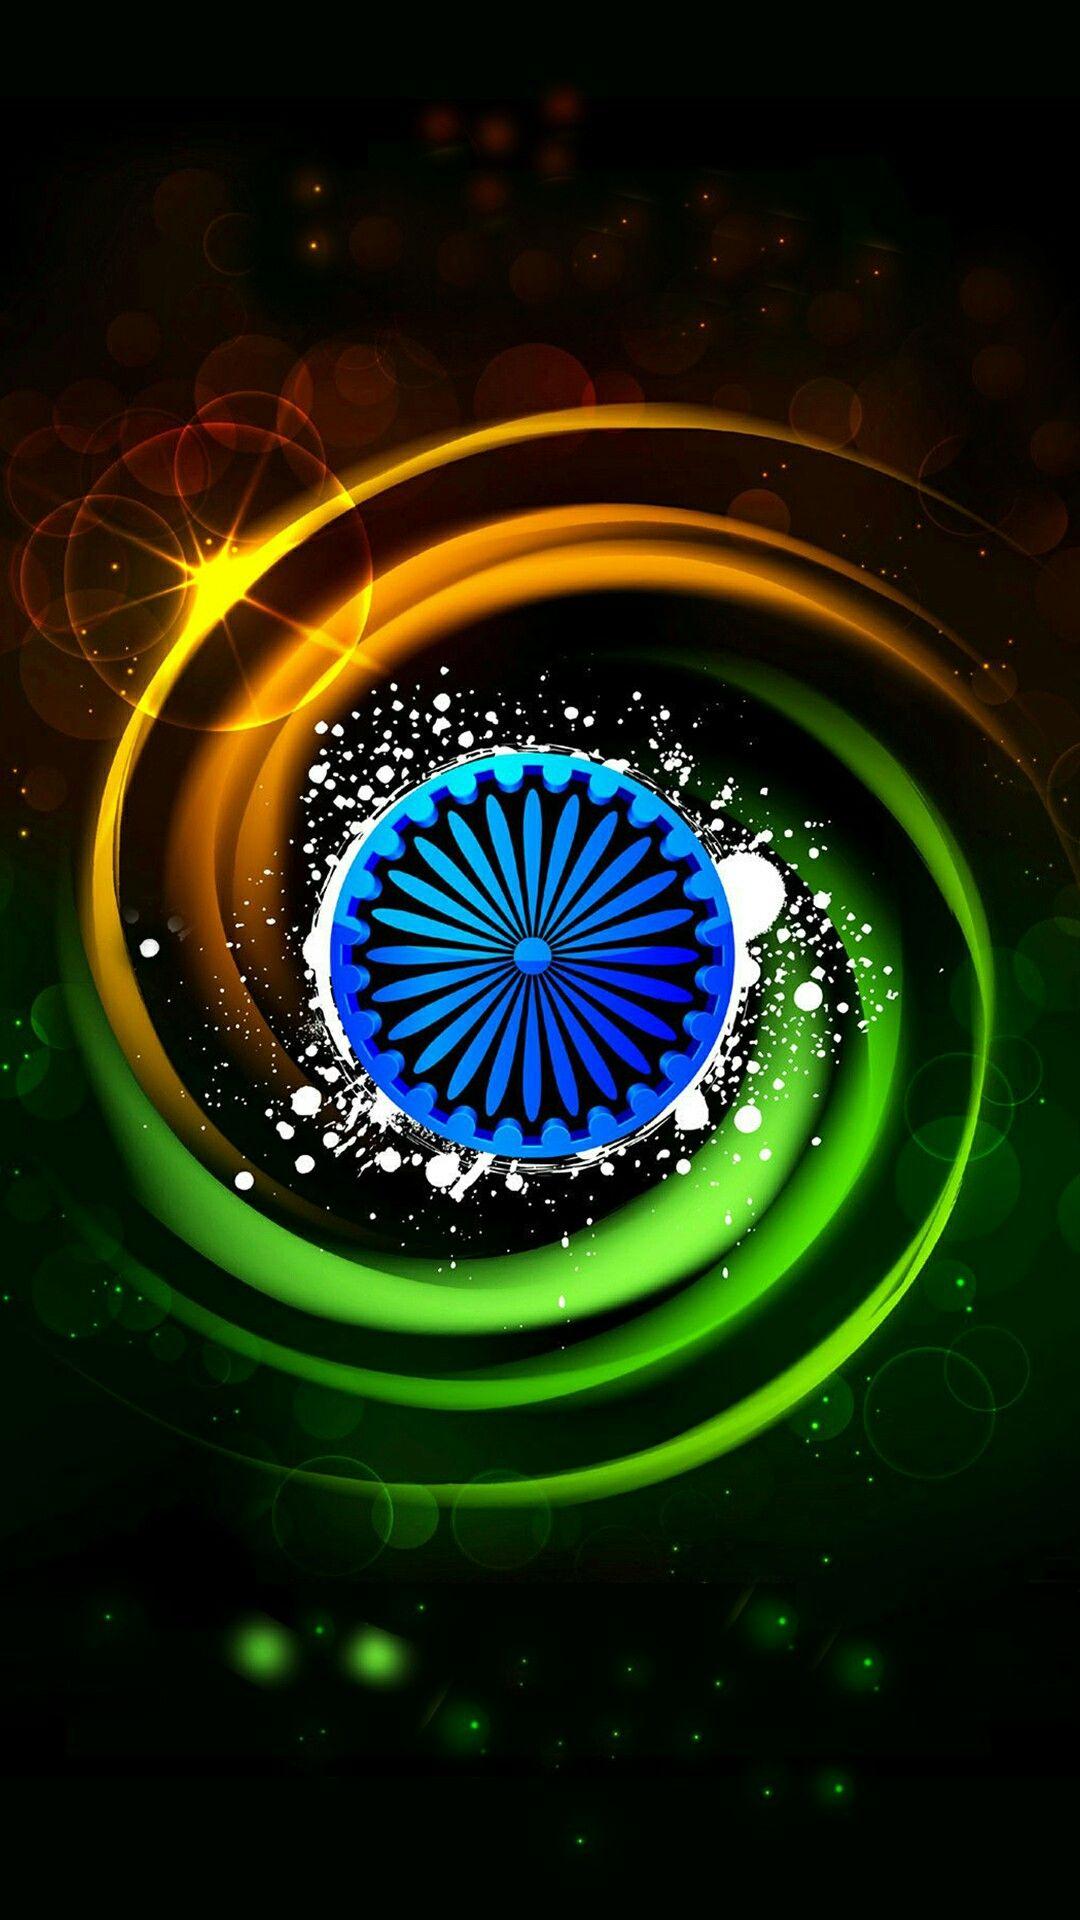 Indian Flag Salute Traveler Photography 4K Ultra HD Mobile Wallpaper